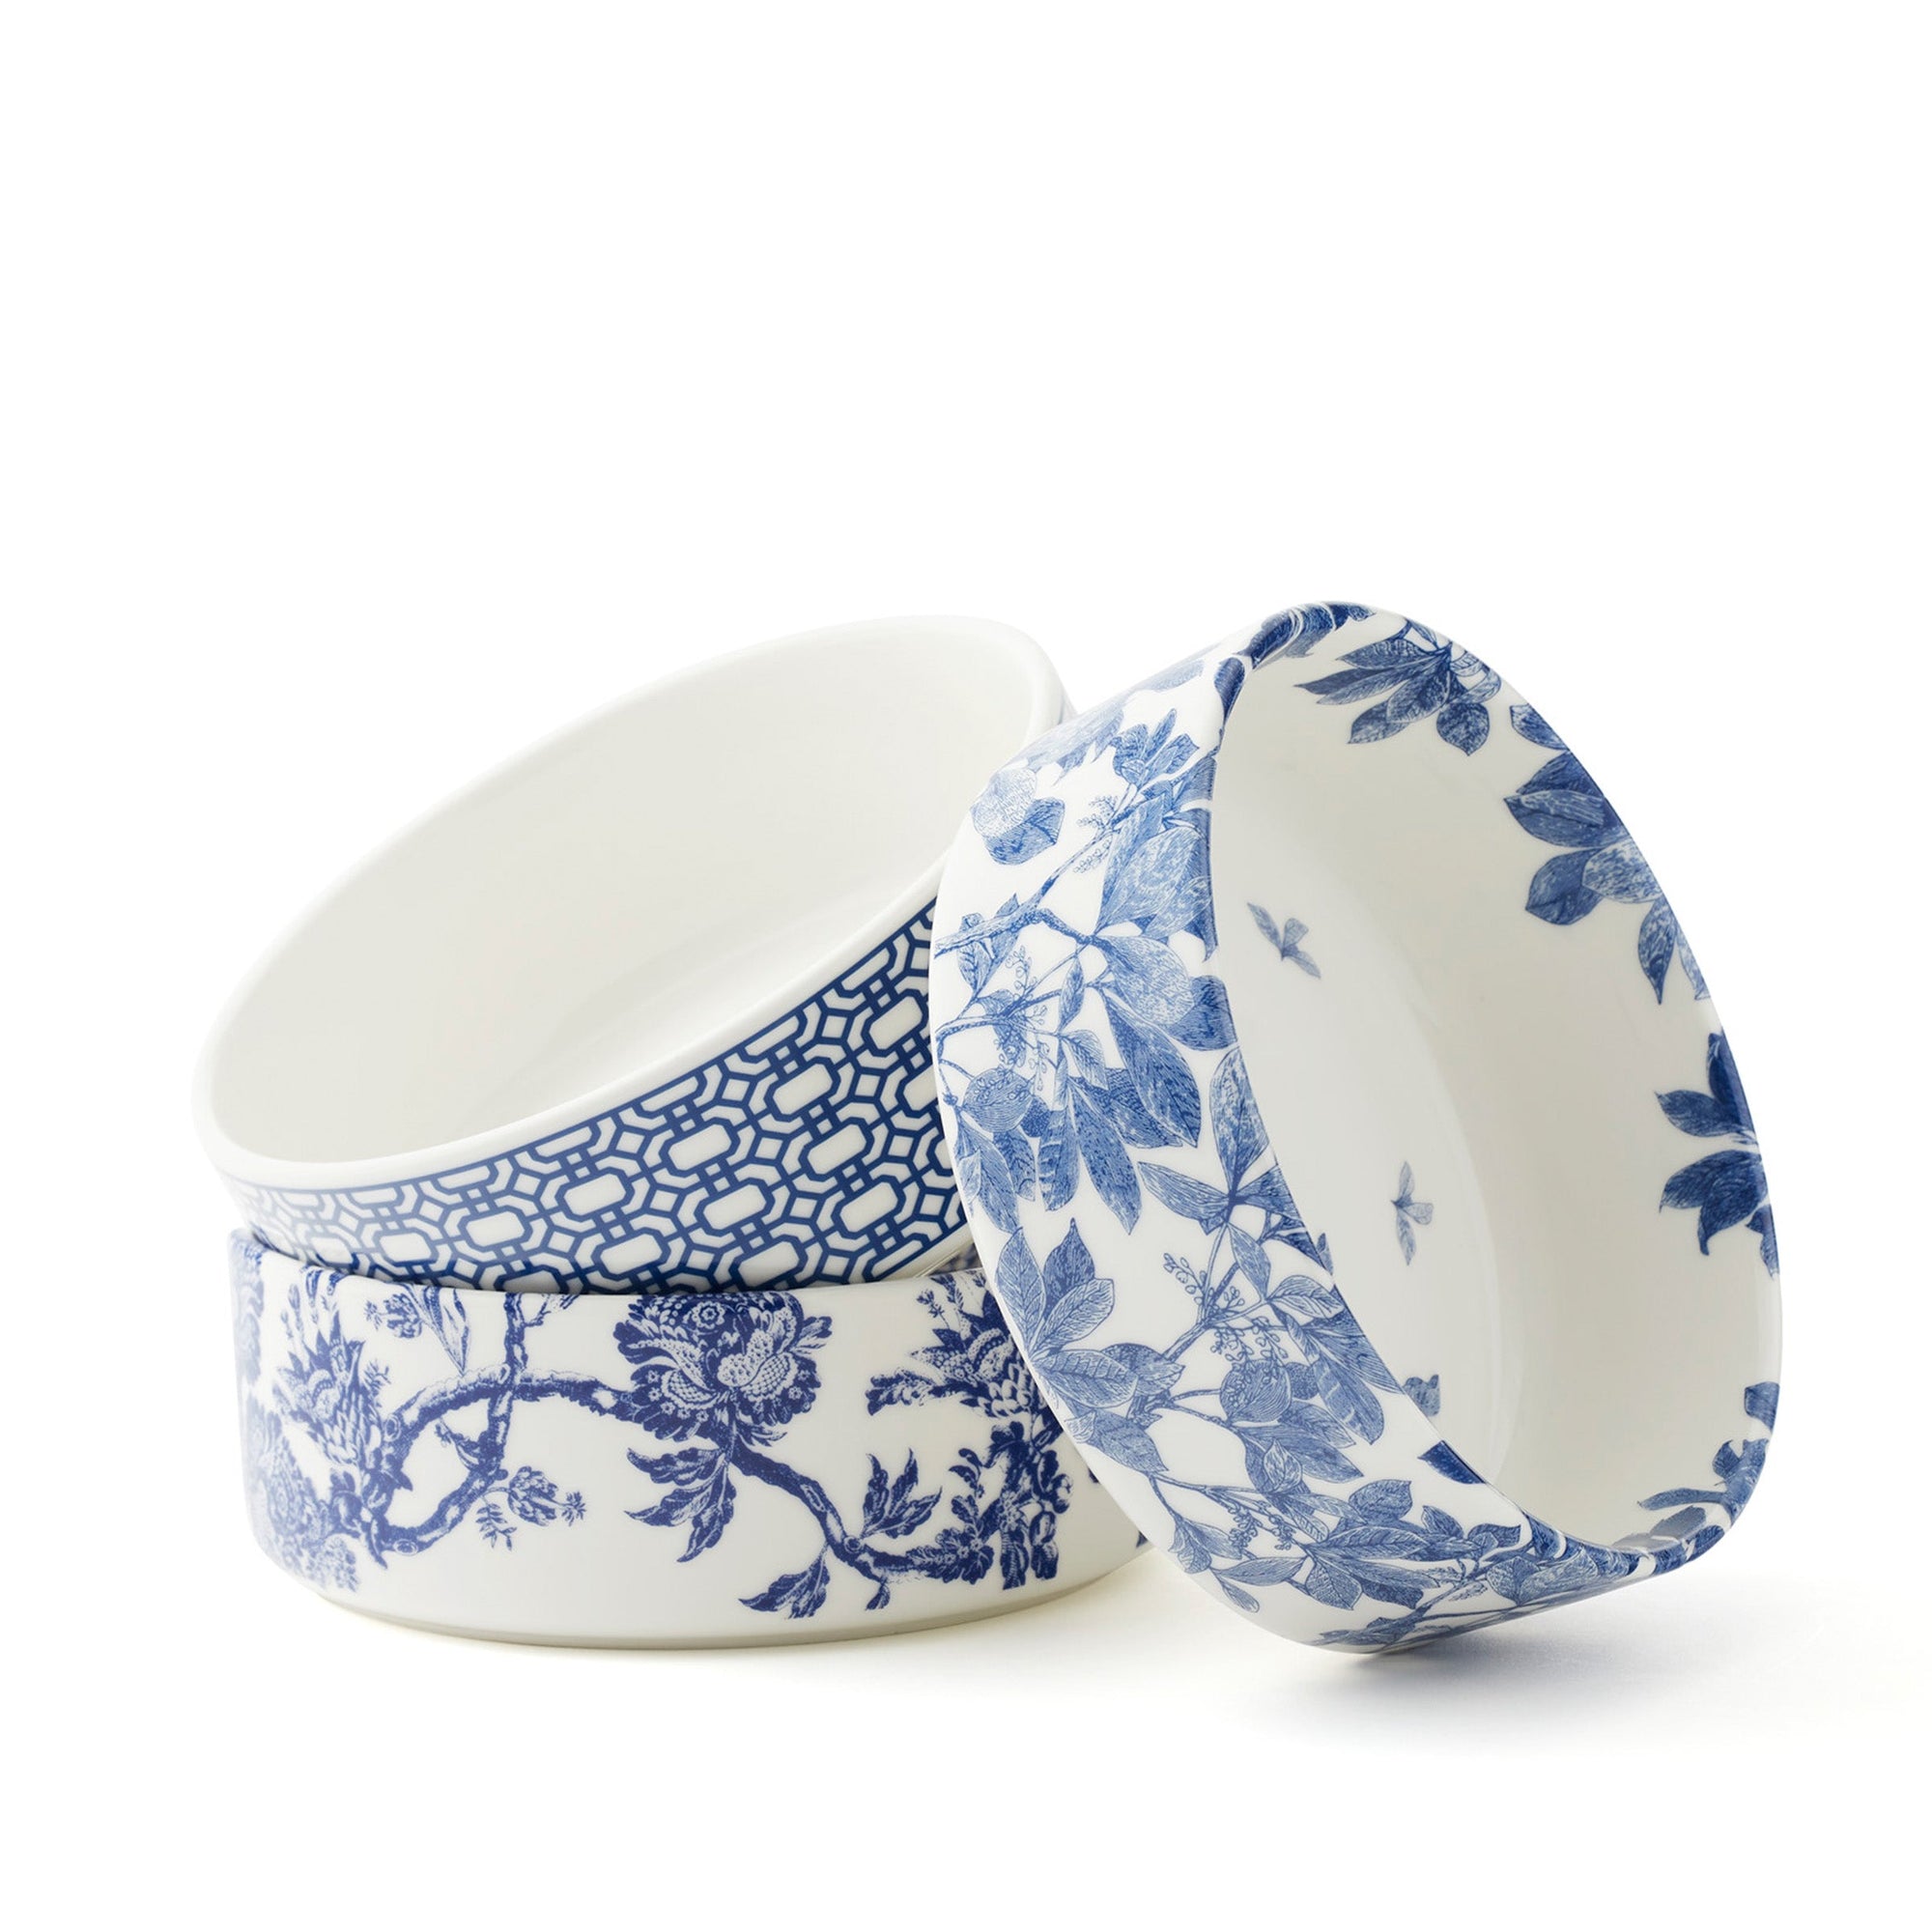 Large Arbor blue and white premium porcelain pet bowl from Caskata.